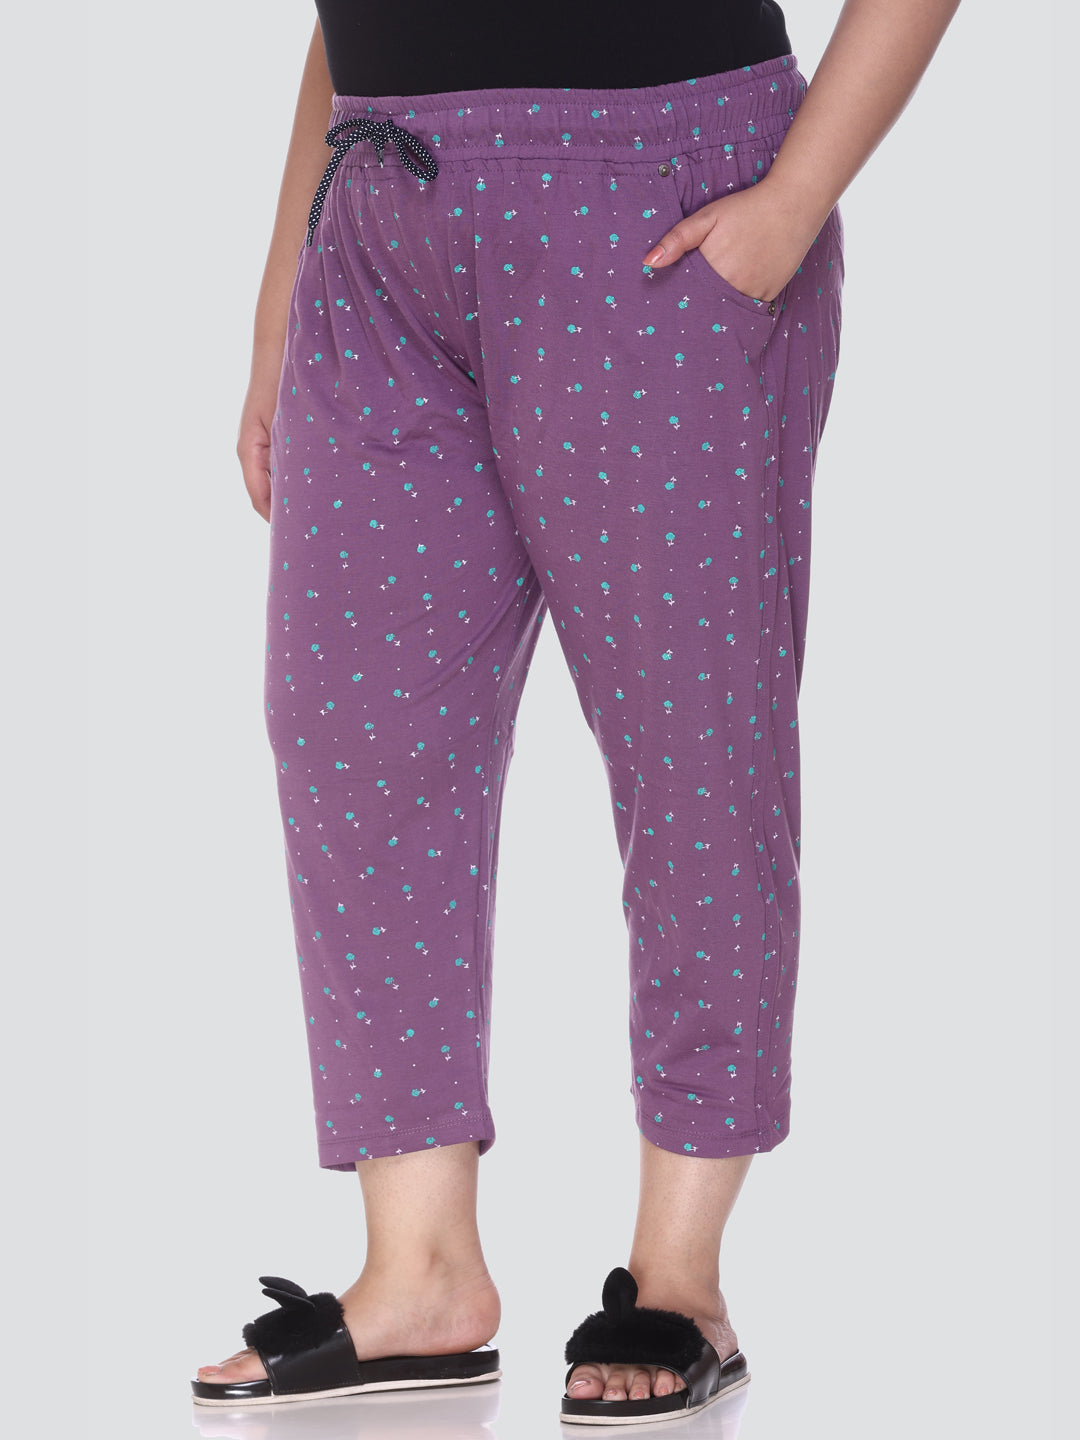 Buy Pink Rabbit Pyjama Pants Cute Bunny 34 Pants Womens Online in India   Etsy